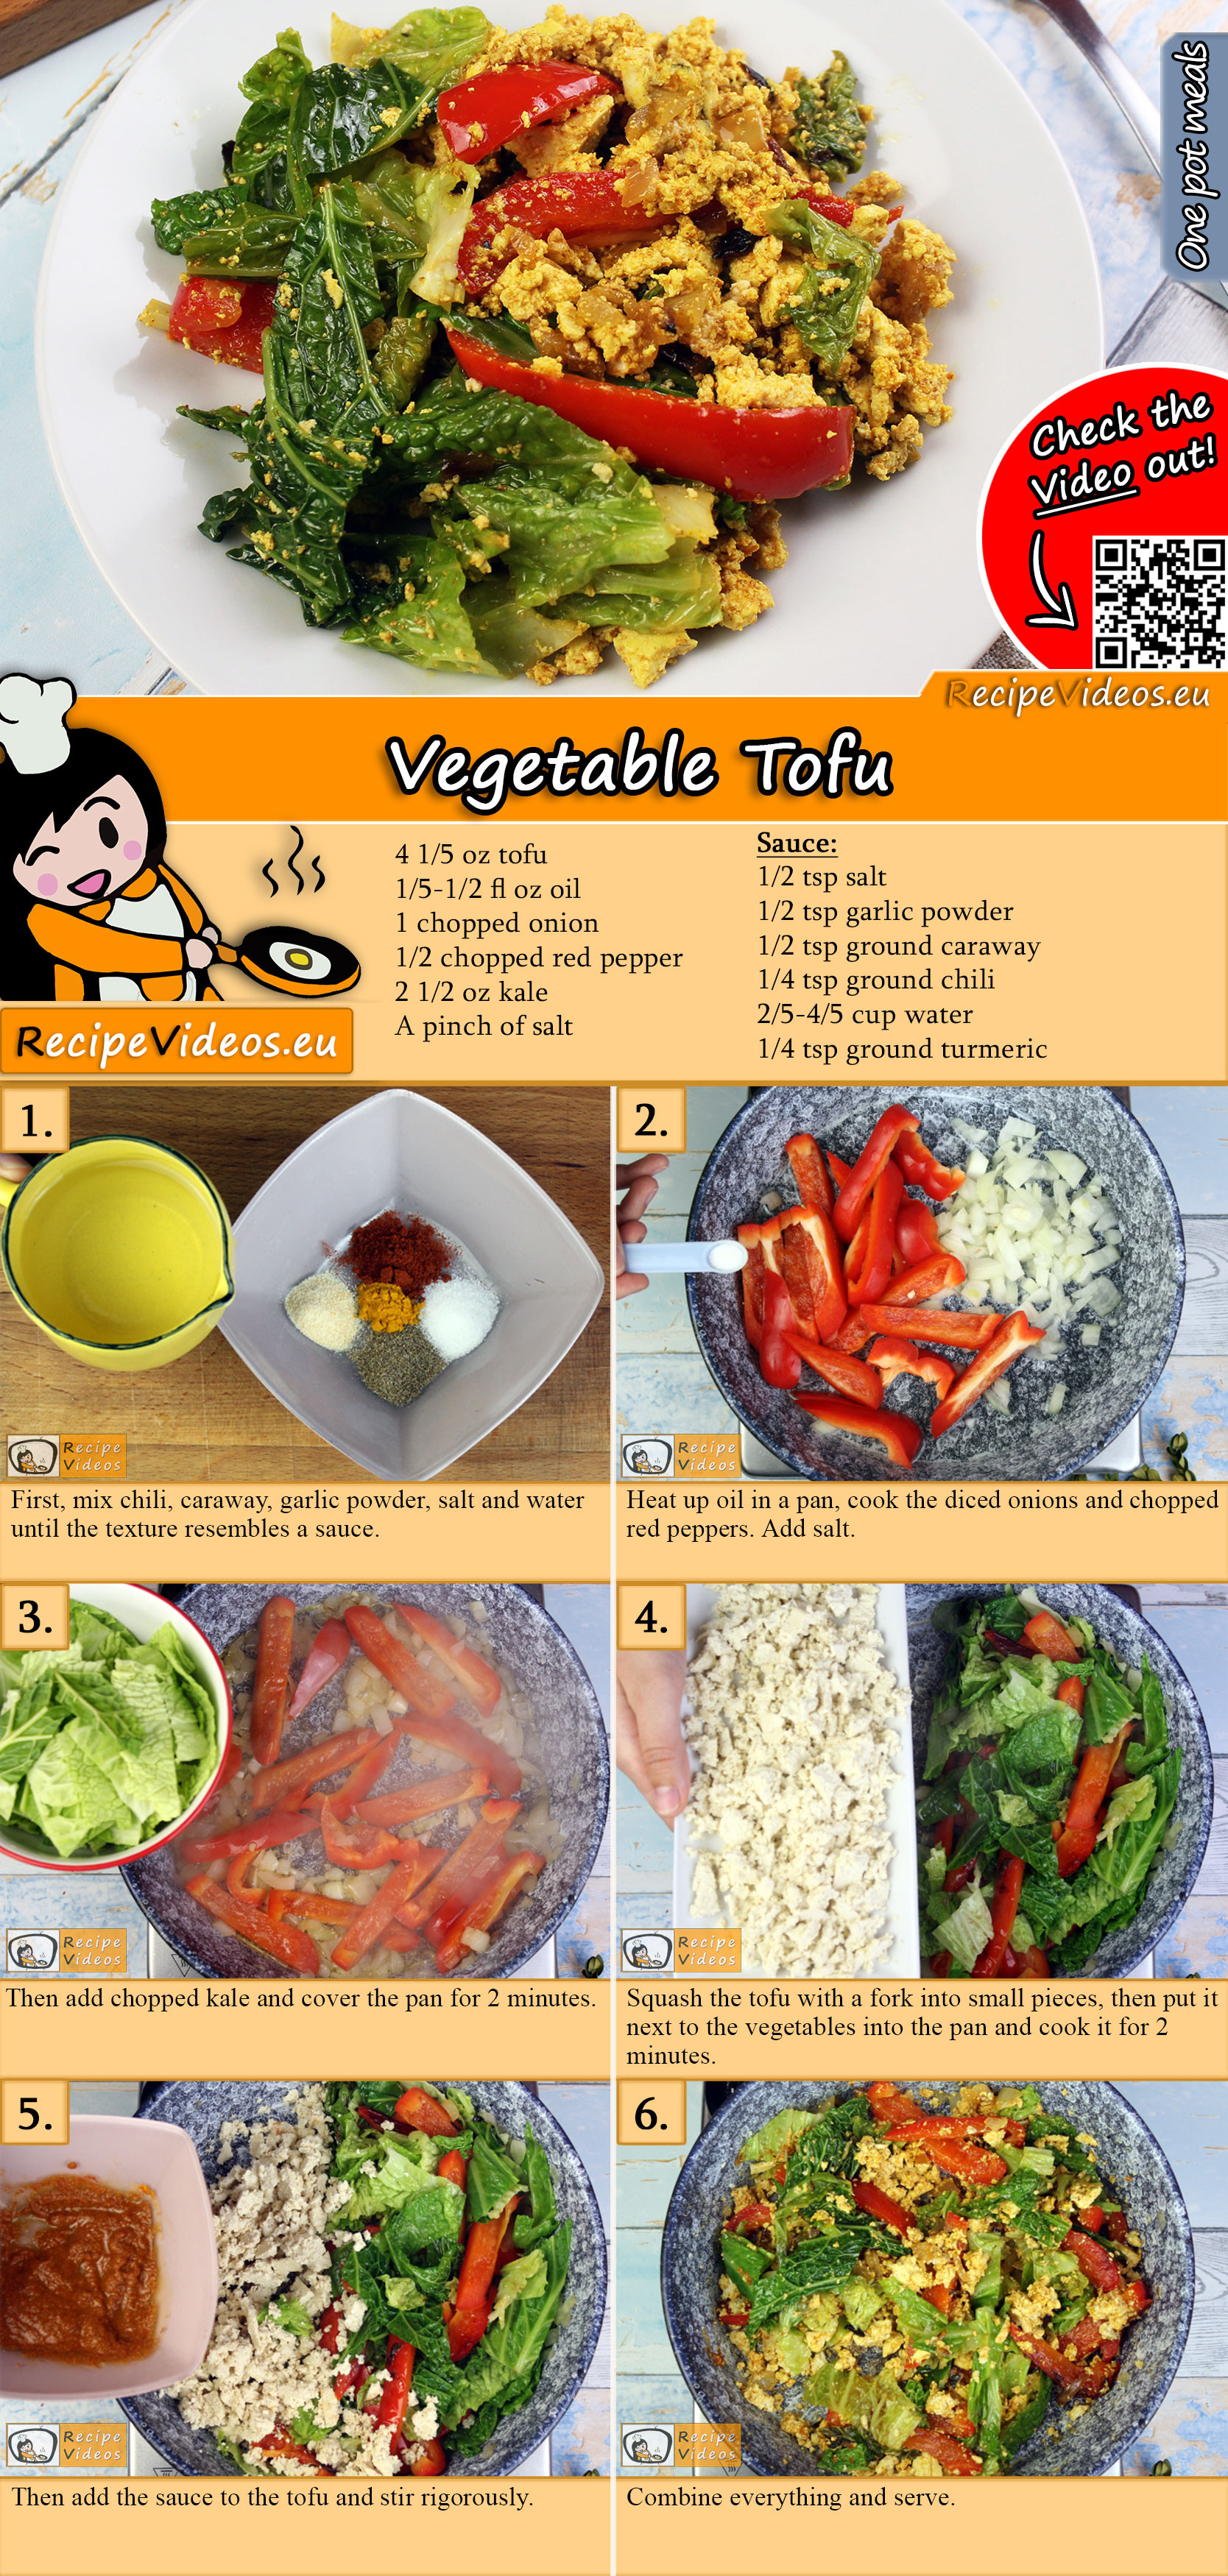 Vegetable Tofu recipe with video